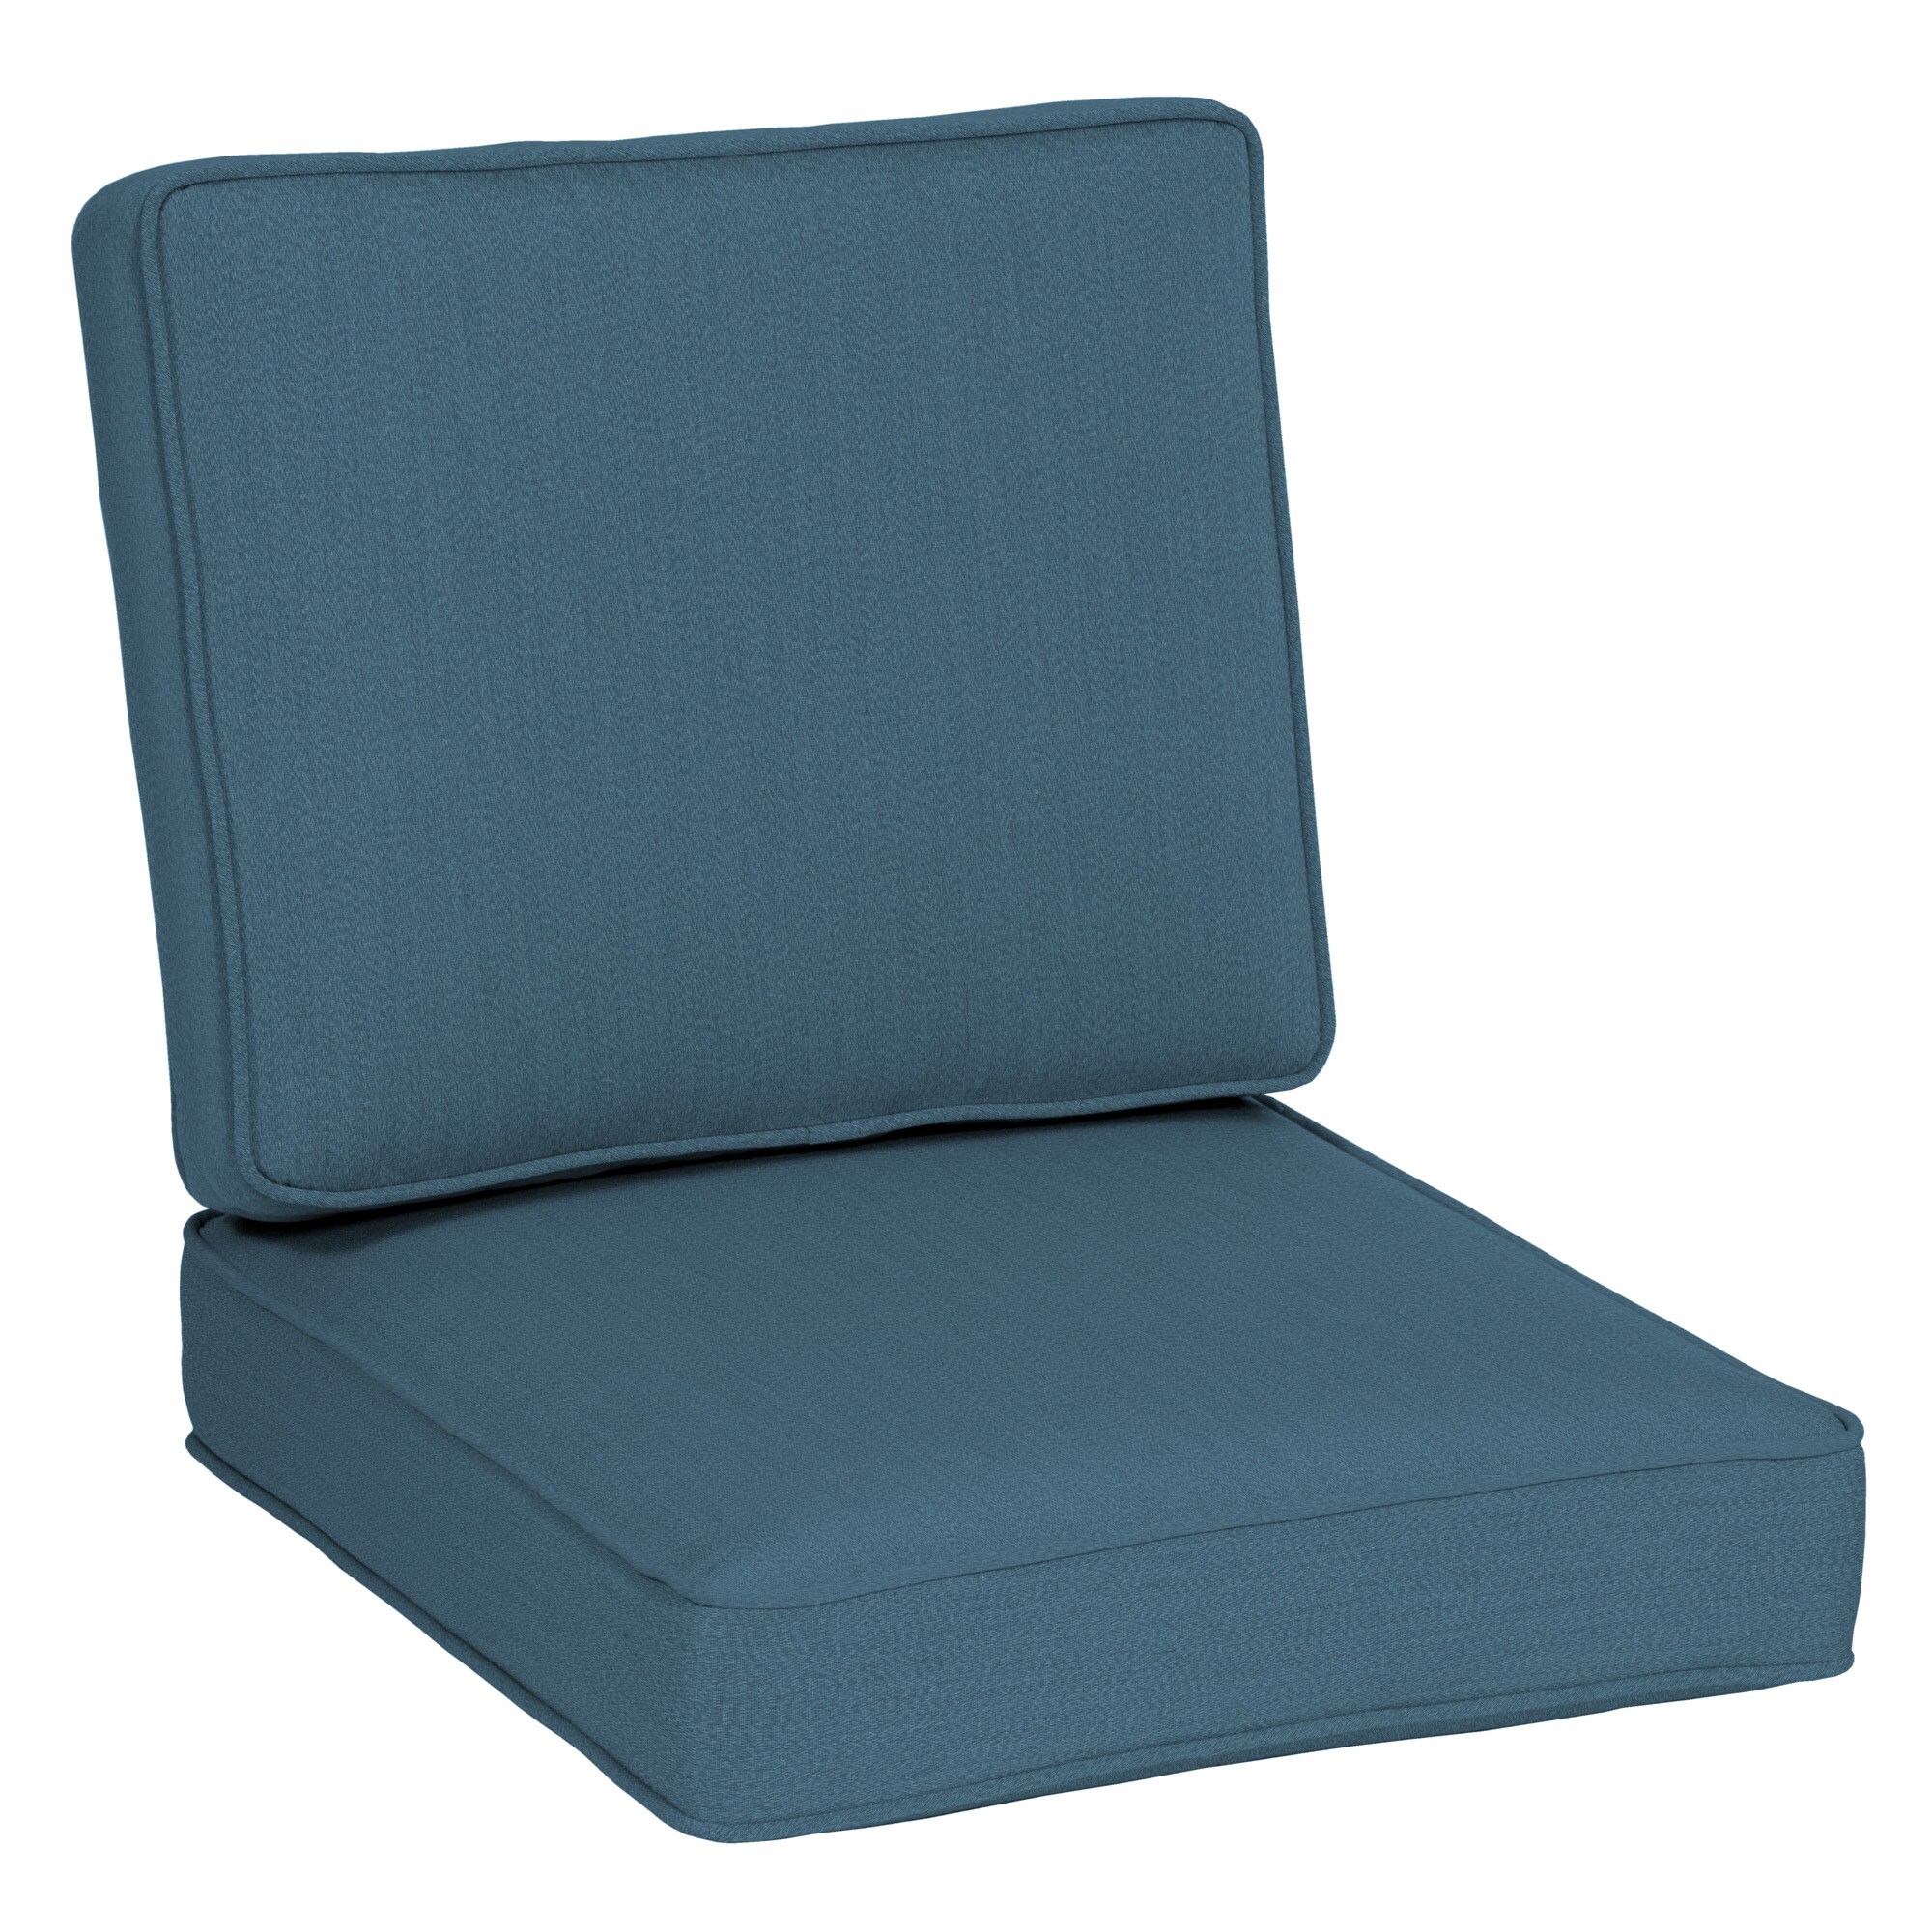 Chambray Beige Plain Indoor Cushion (L)35cm x (W)35cm